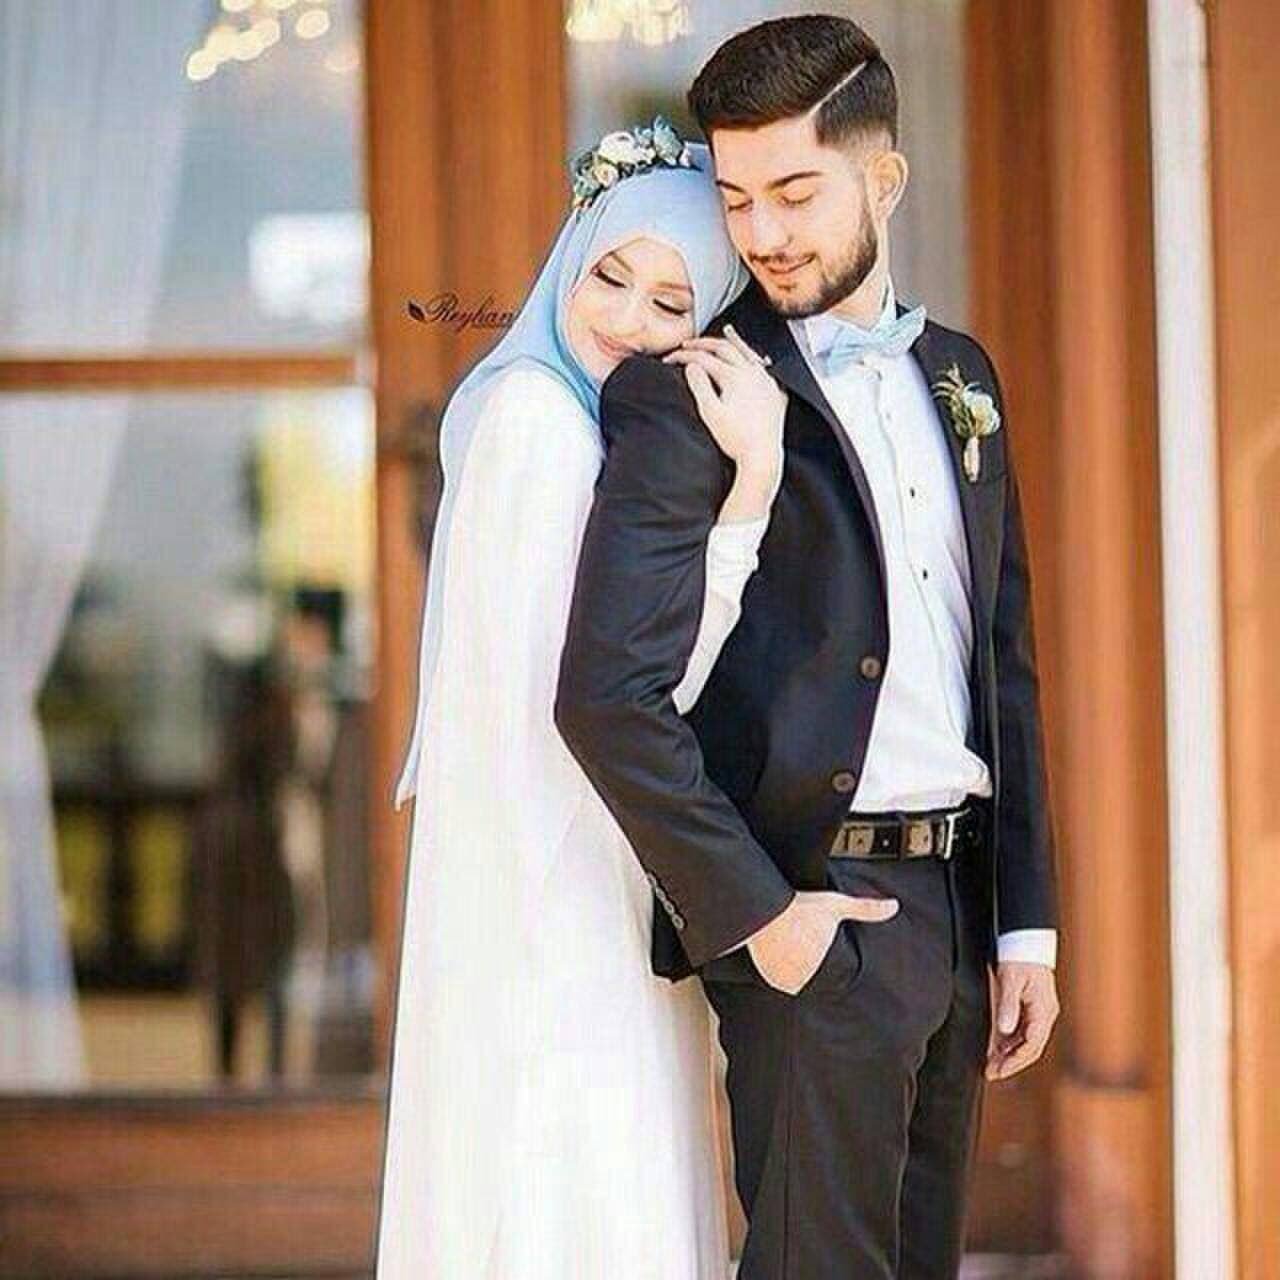 Alhazar odamxo r kelin. Хуснора Шадиева свадьба. Невеста мусульманка. Жених и невеста мусульмане.